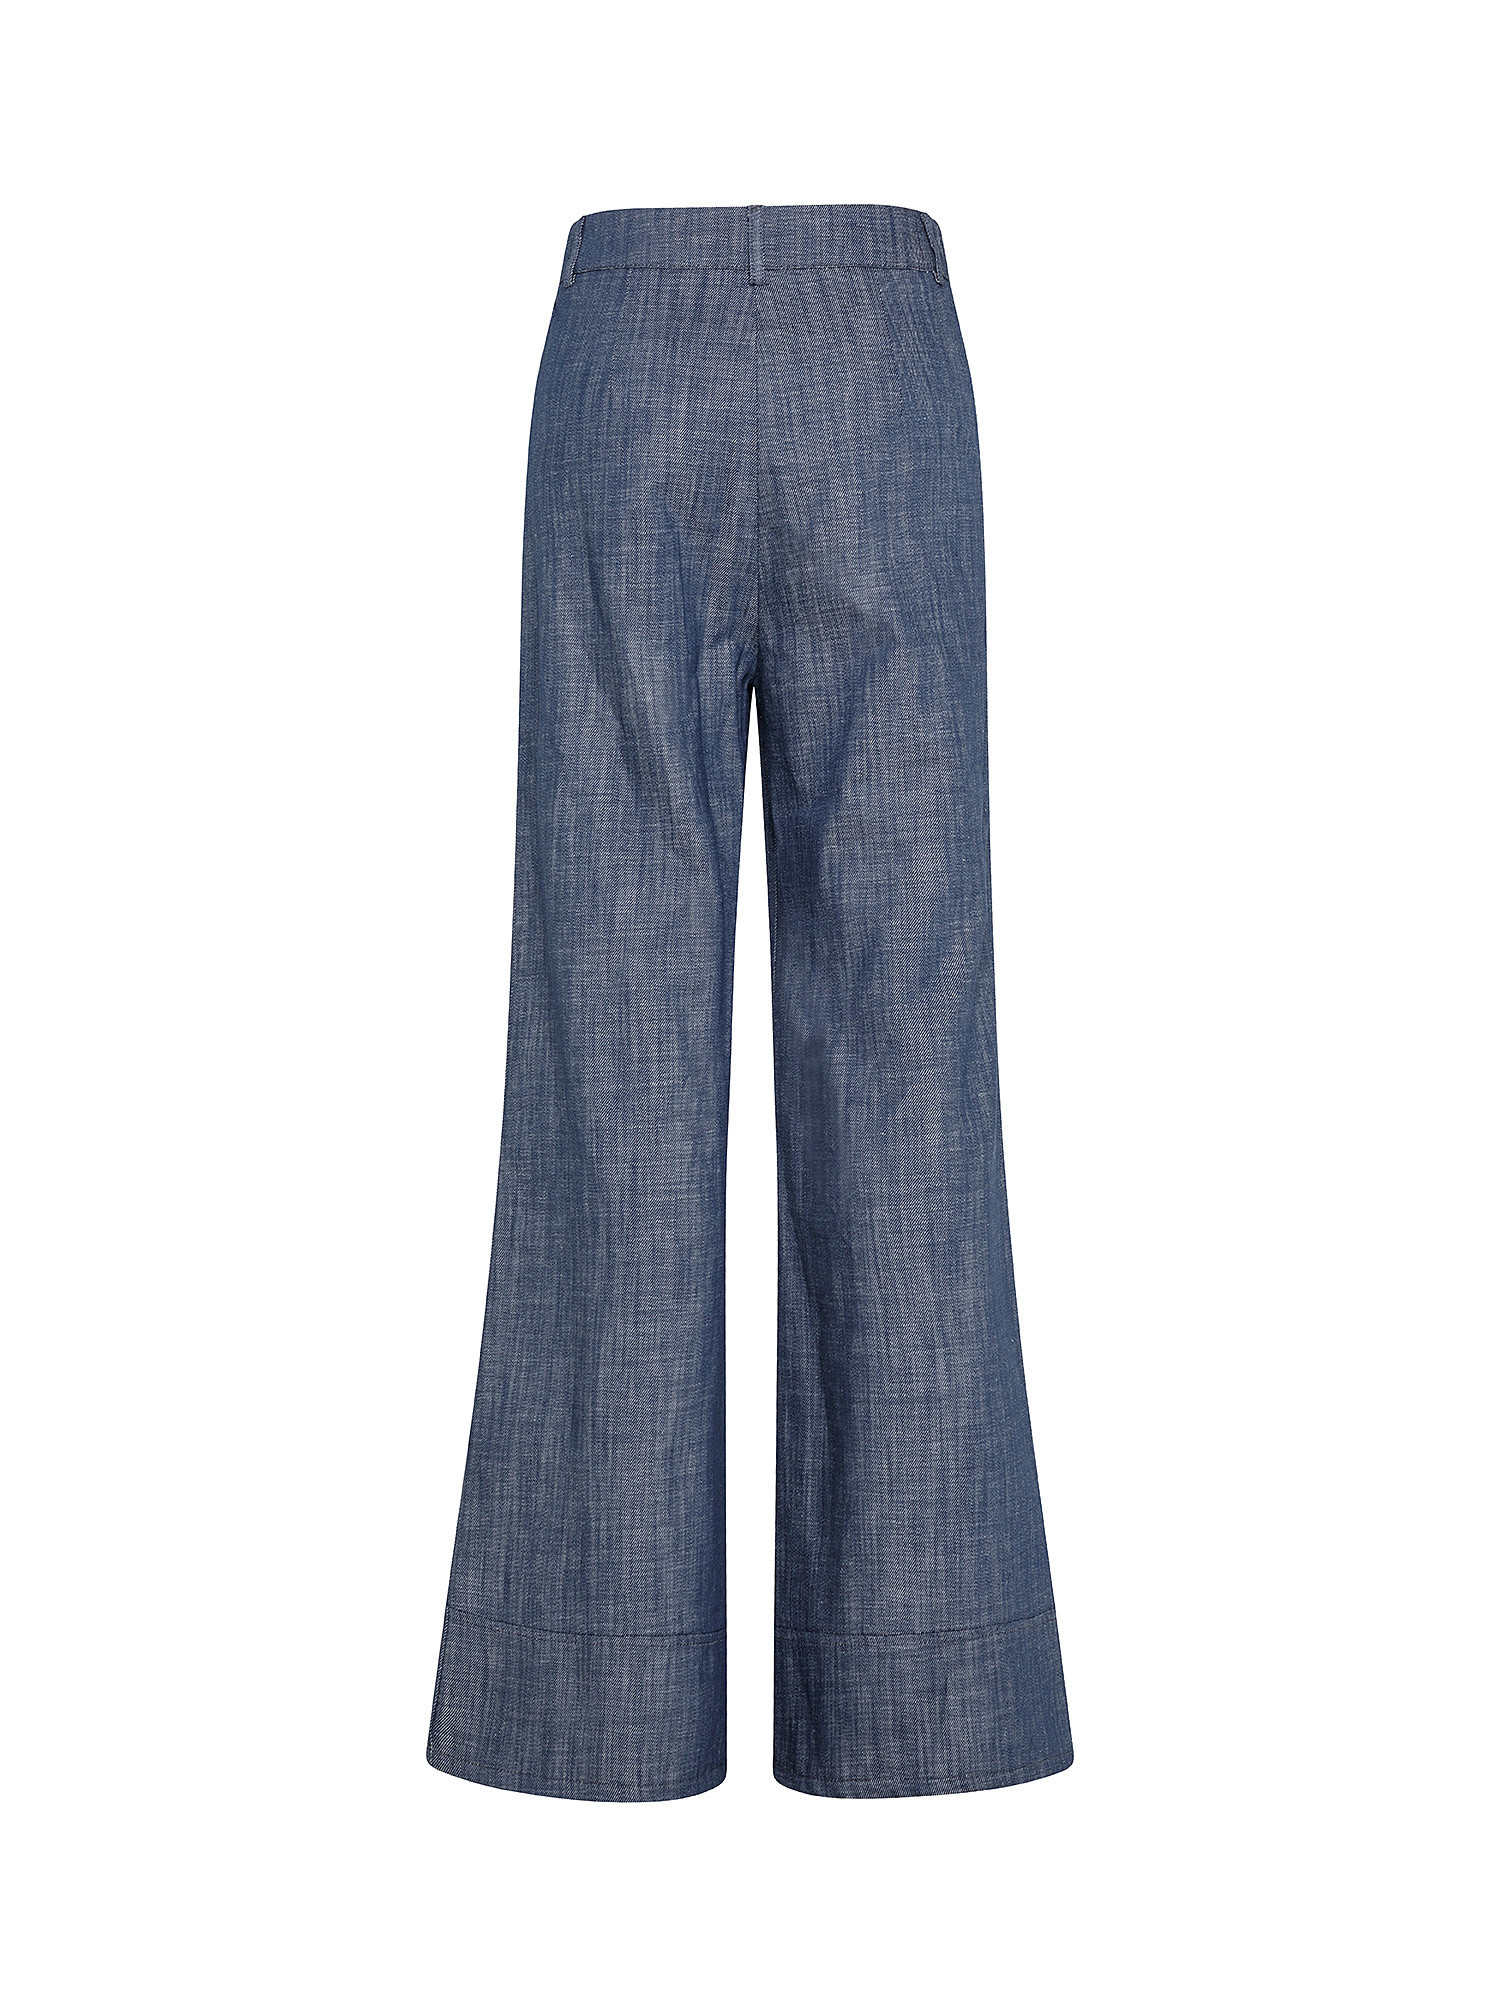 Pantalone cinque tasche, Denim, large image number 1